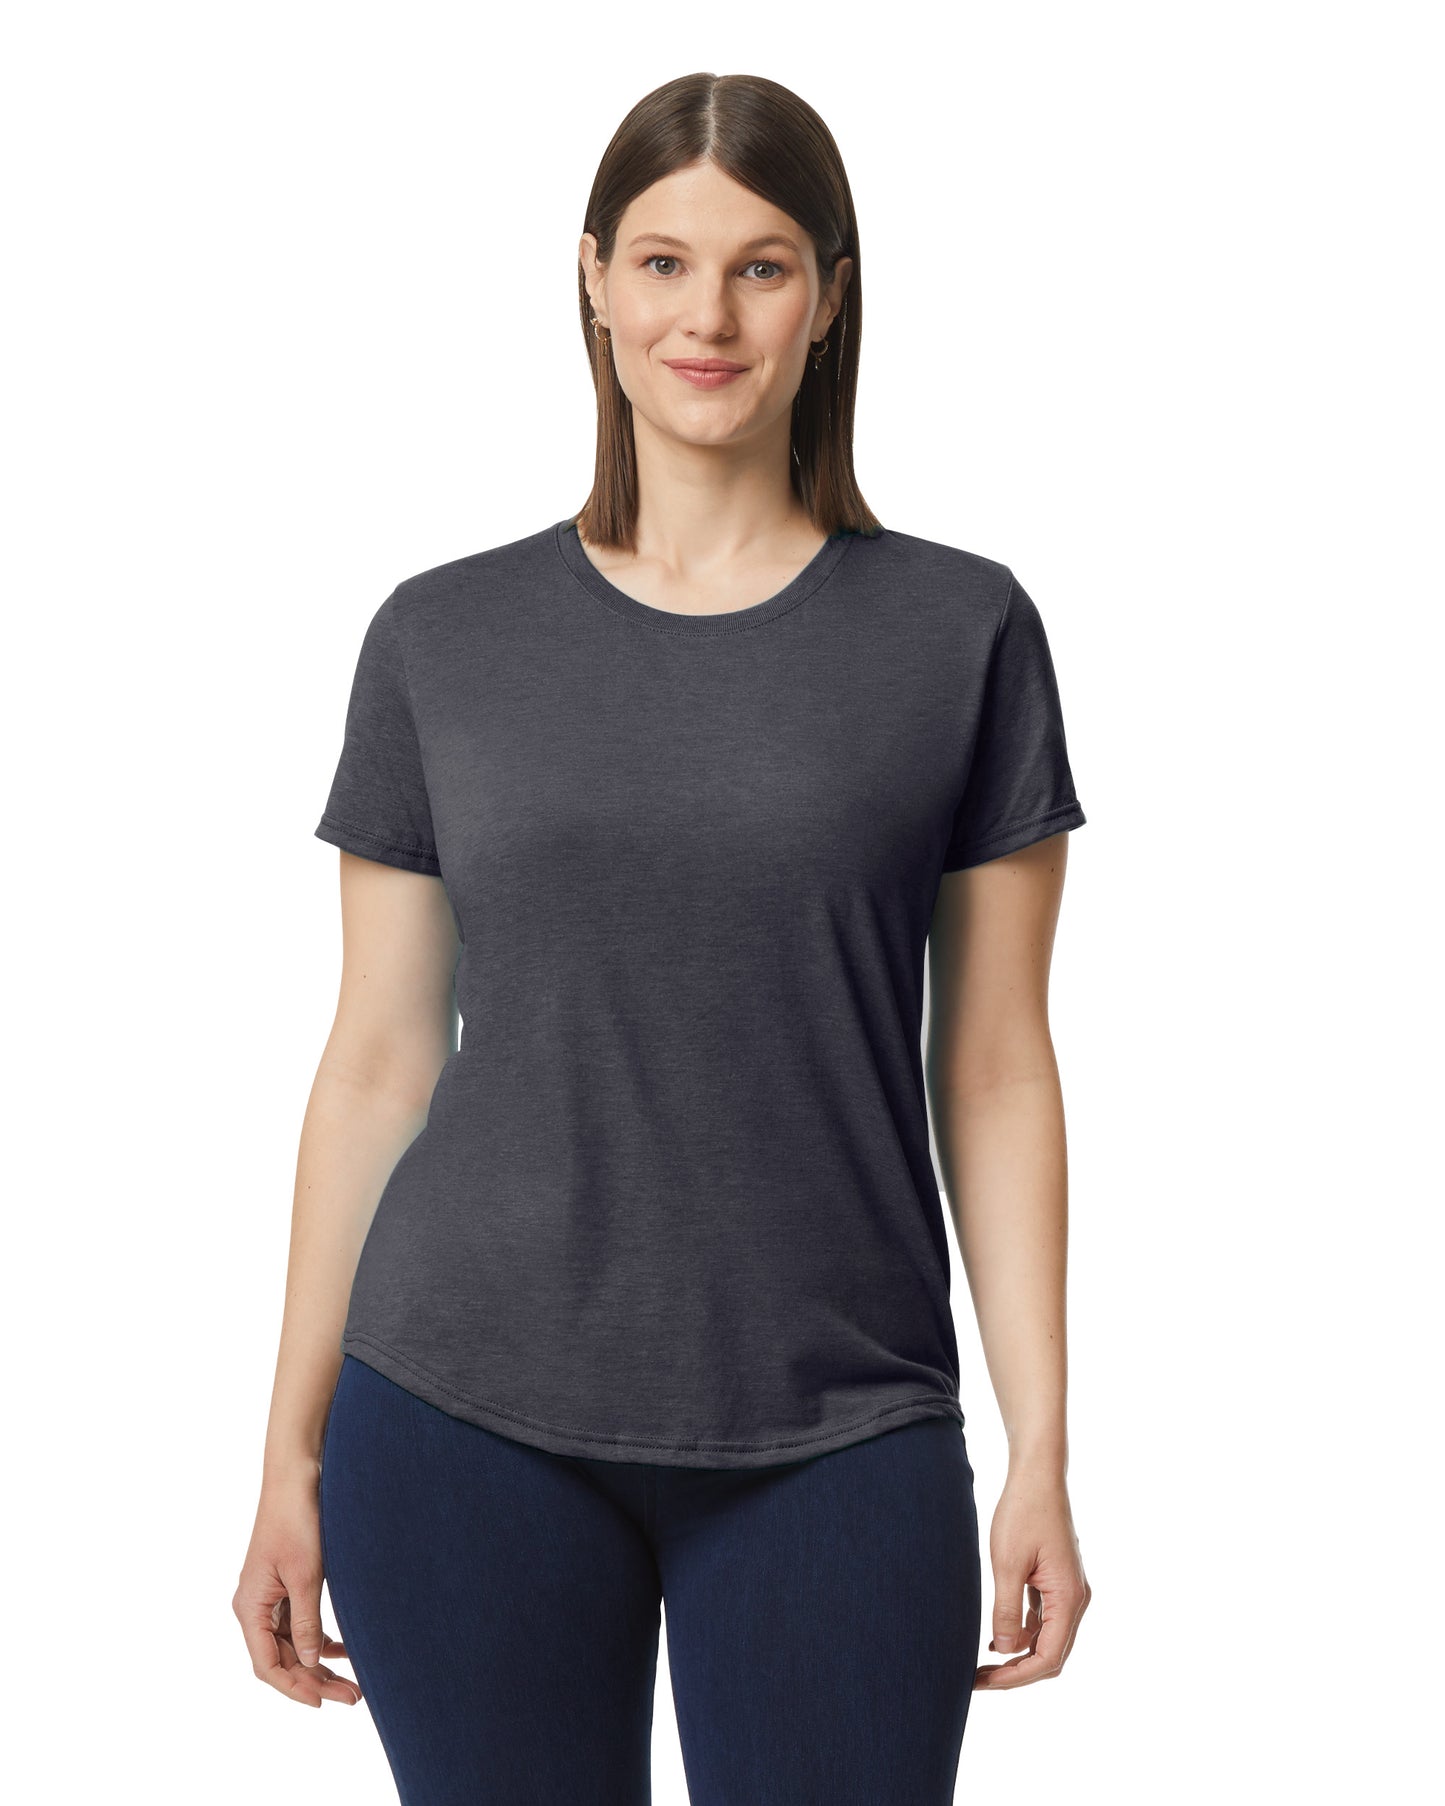 Ladies Softest Tri-blend Heather T-shirts